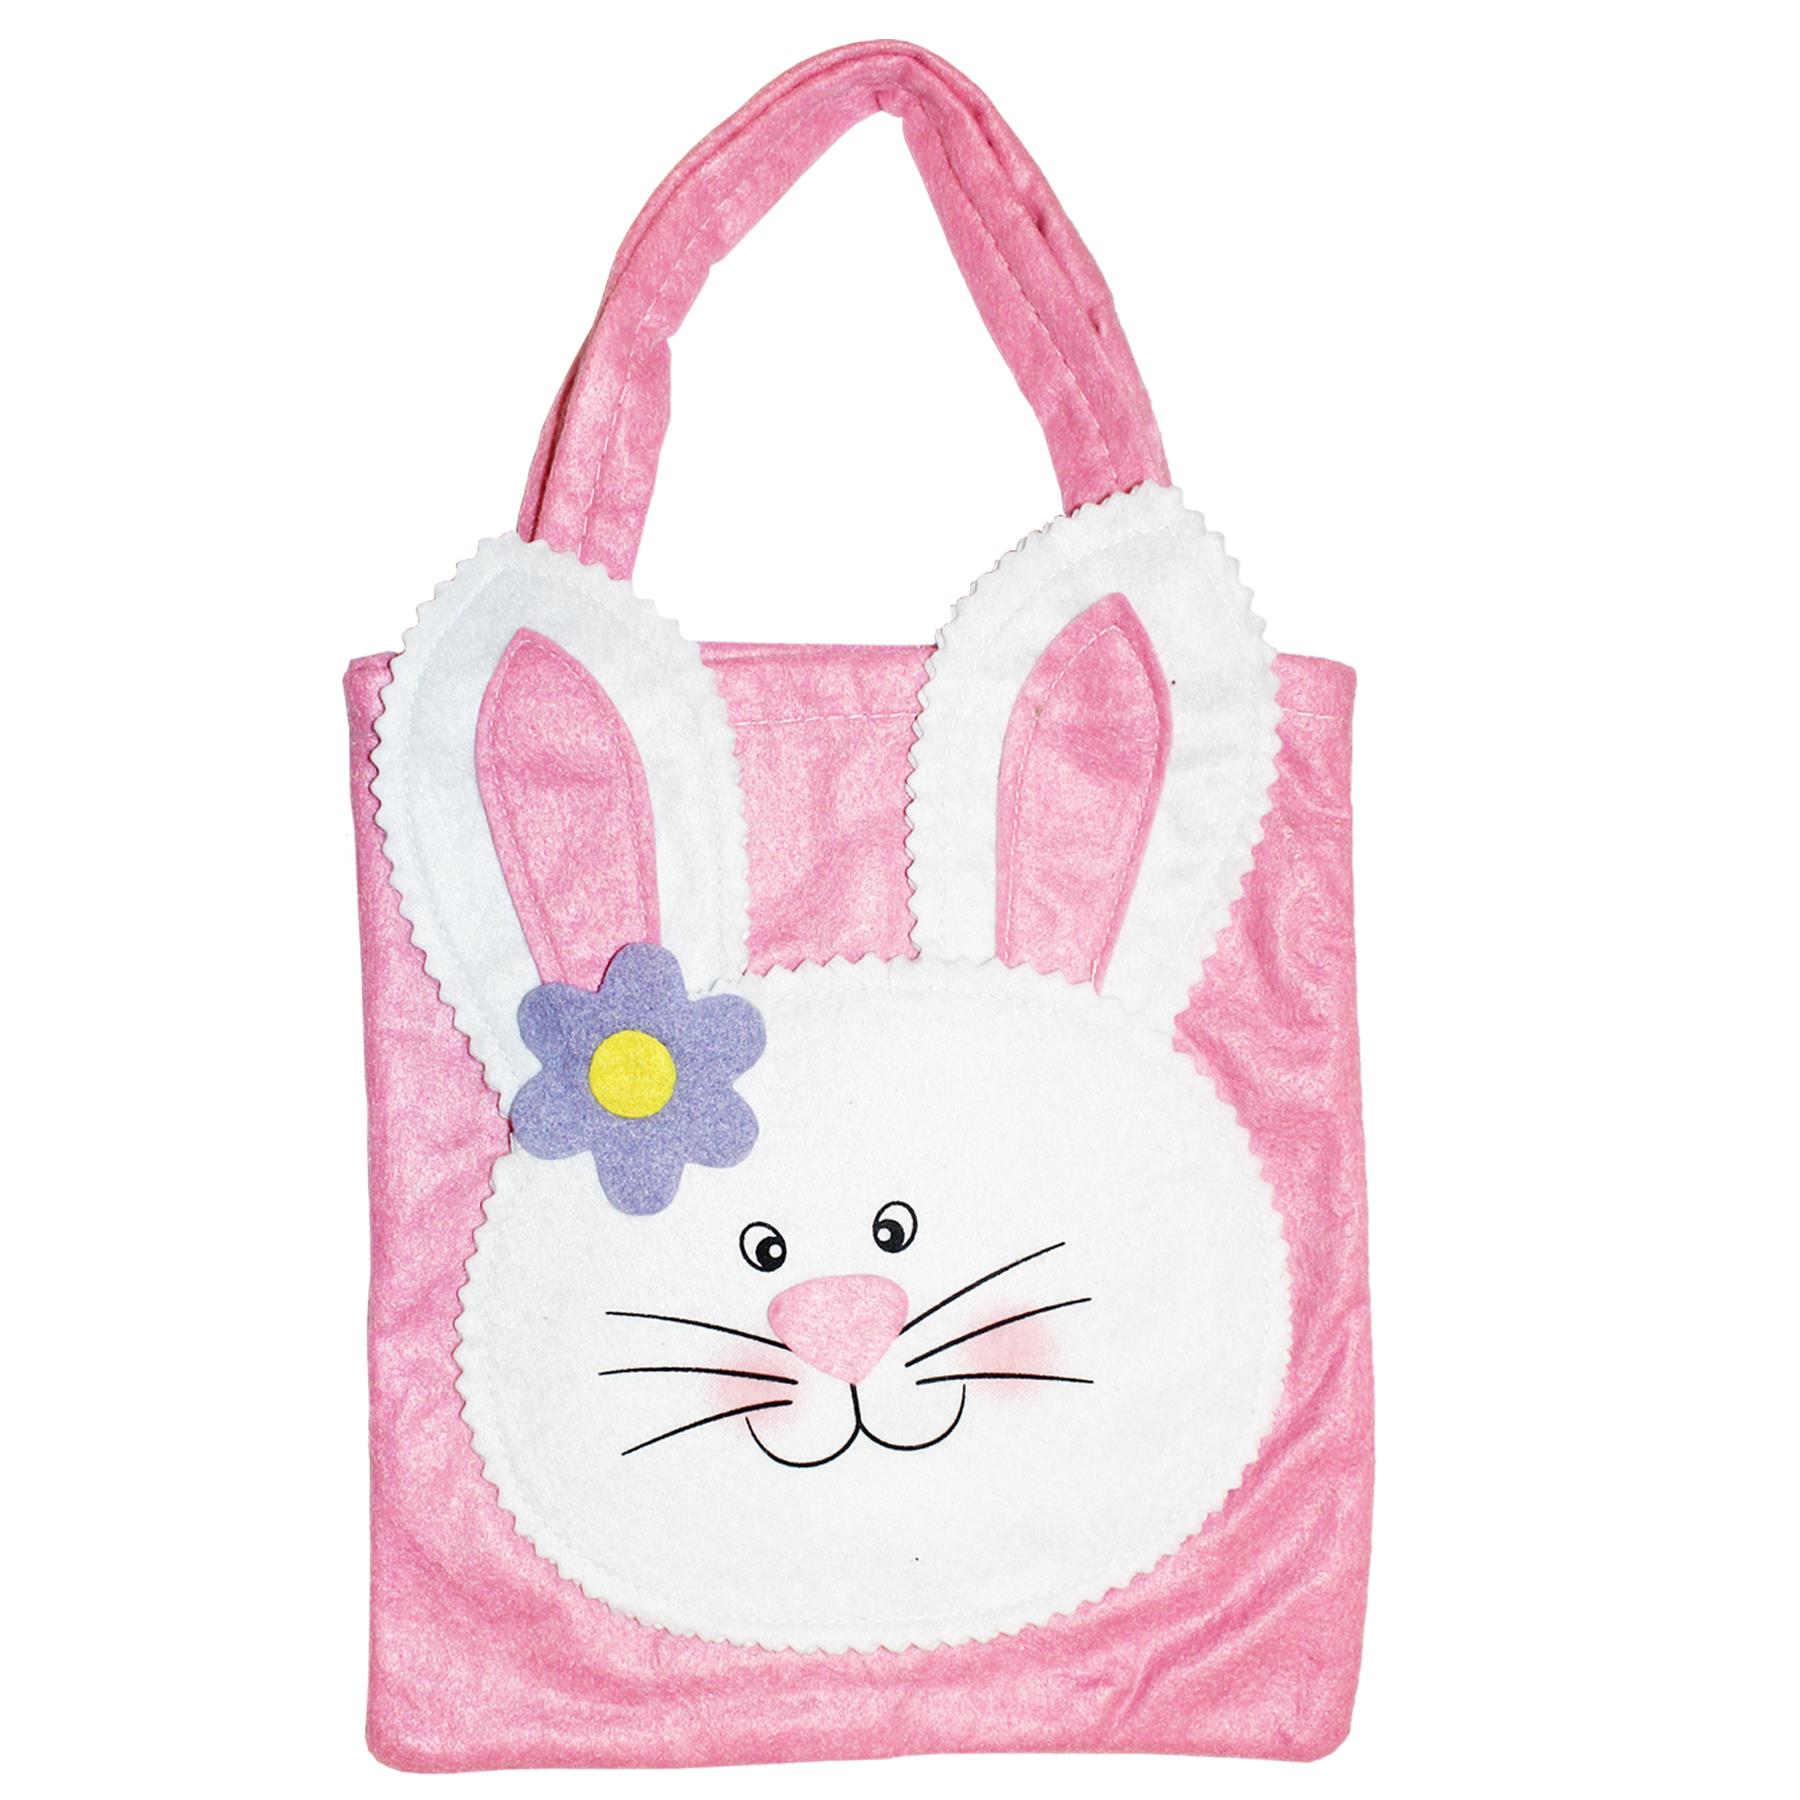 Easter Baskets, Buckets, Accessories - Bunny Felt Bag Pink